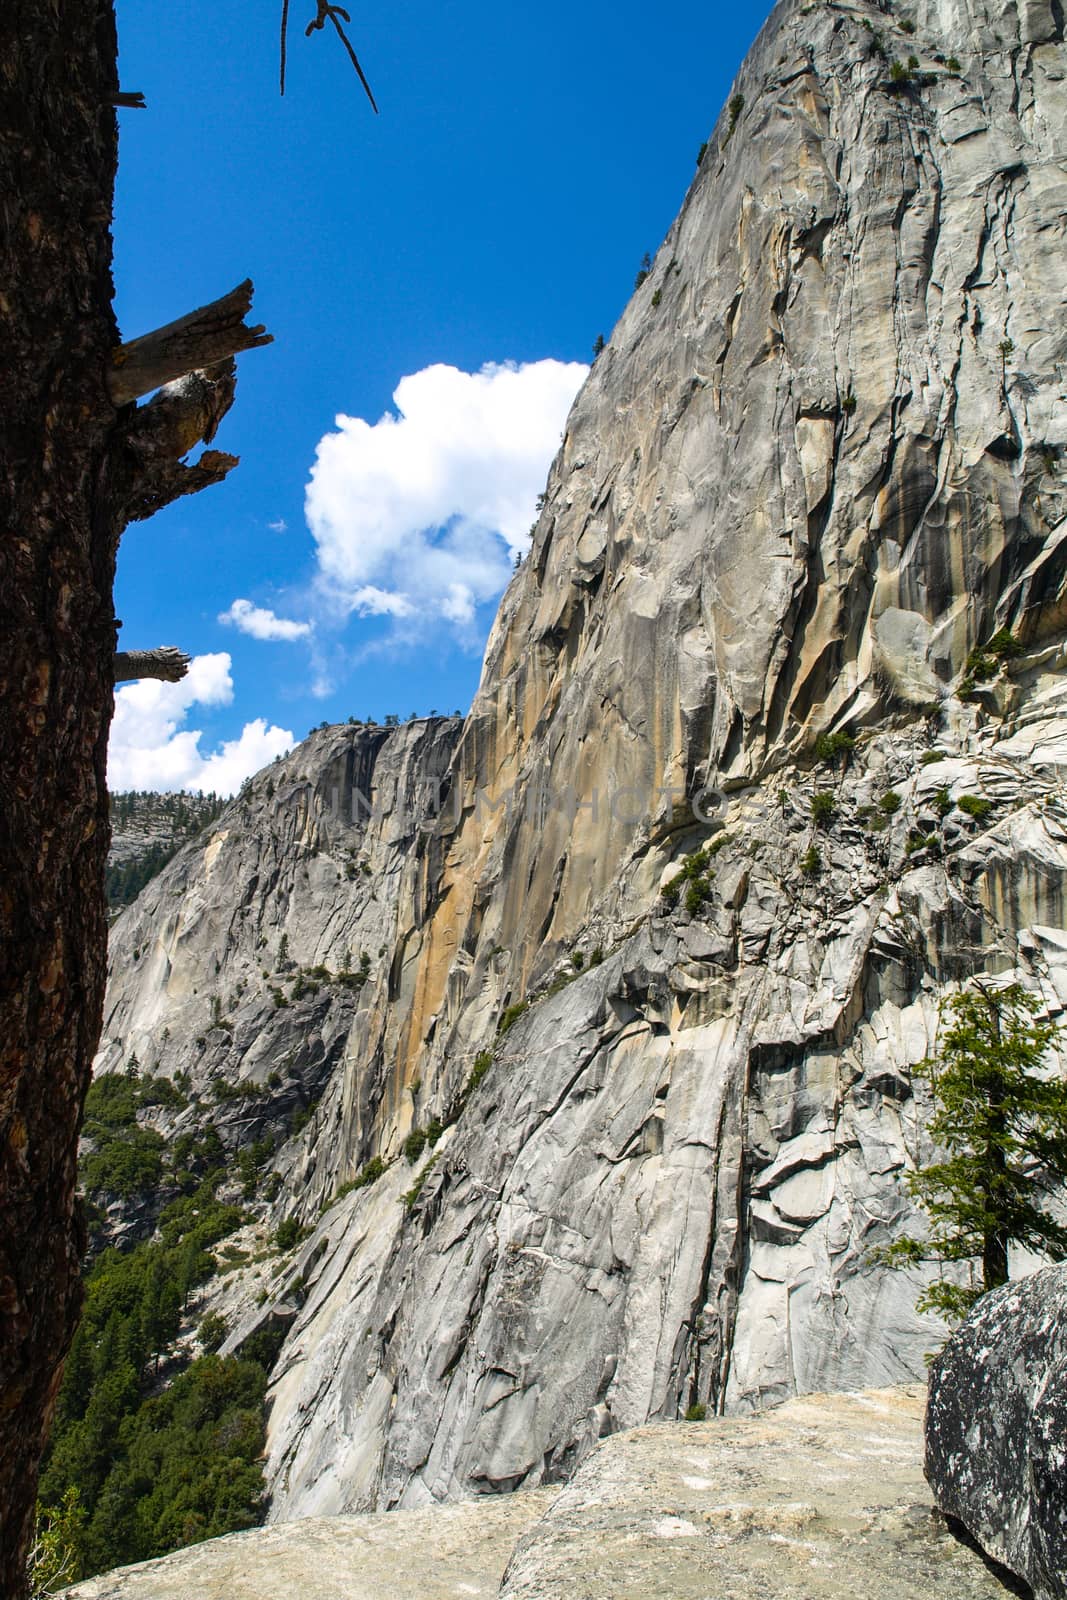 Yosemite rocks by pyty